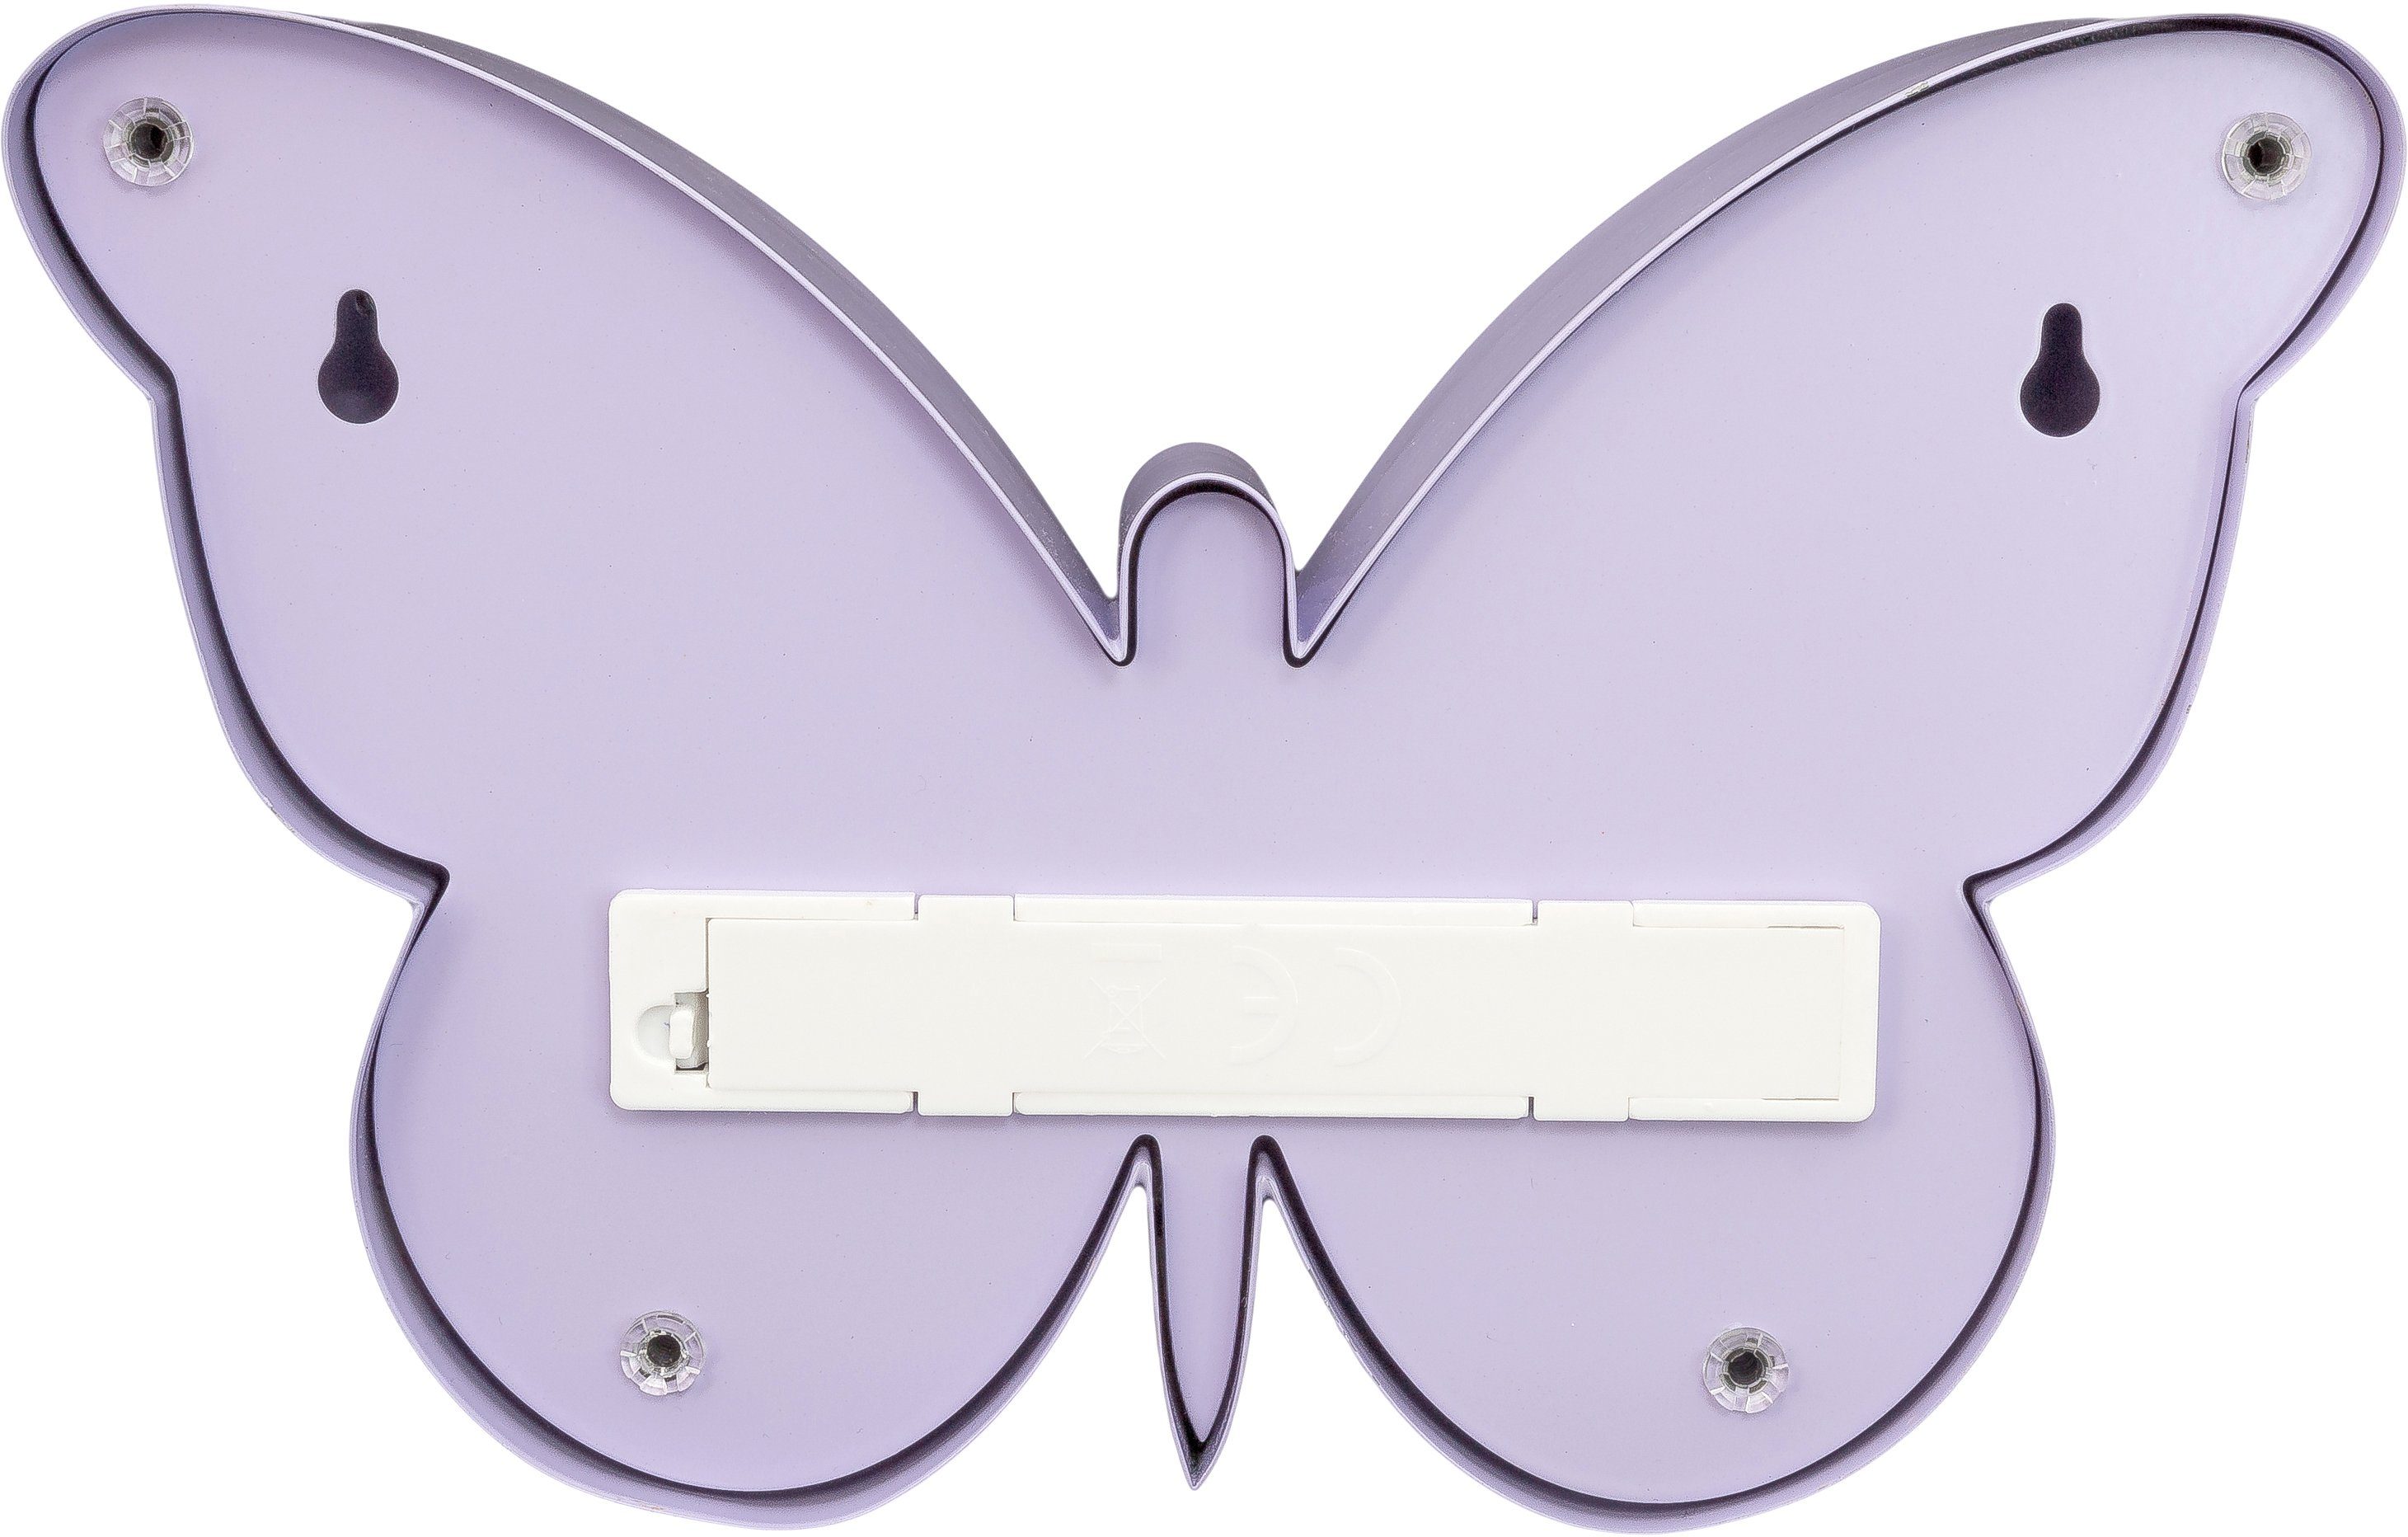 Dekolicht Butterfly, 15 23x MARQUEE Warmweiß, - mit lila 15 integriert, LED LEDs Wandlampe, fest festverbauten Tischlampe LED Butterfly cm LIGHTS